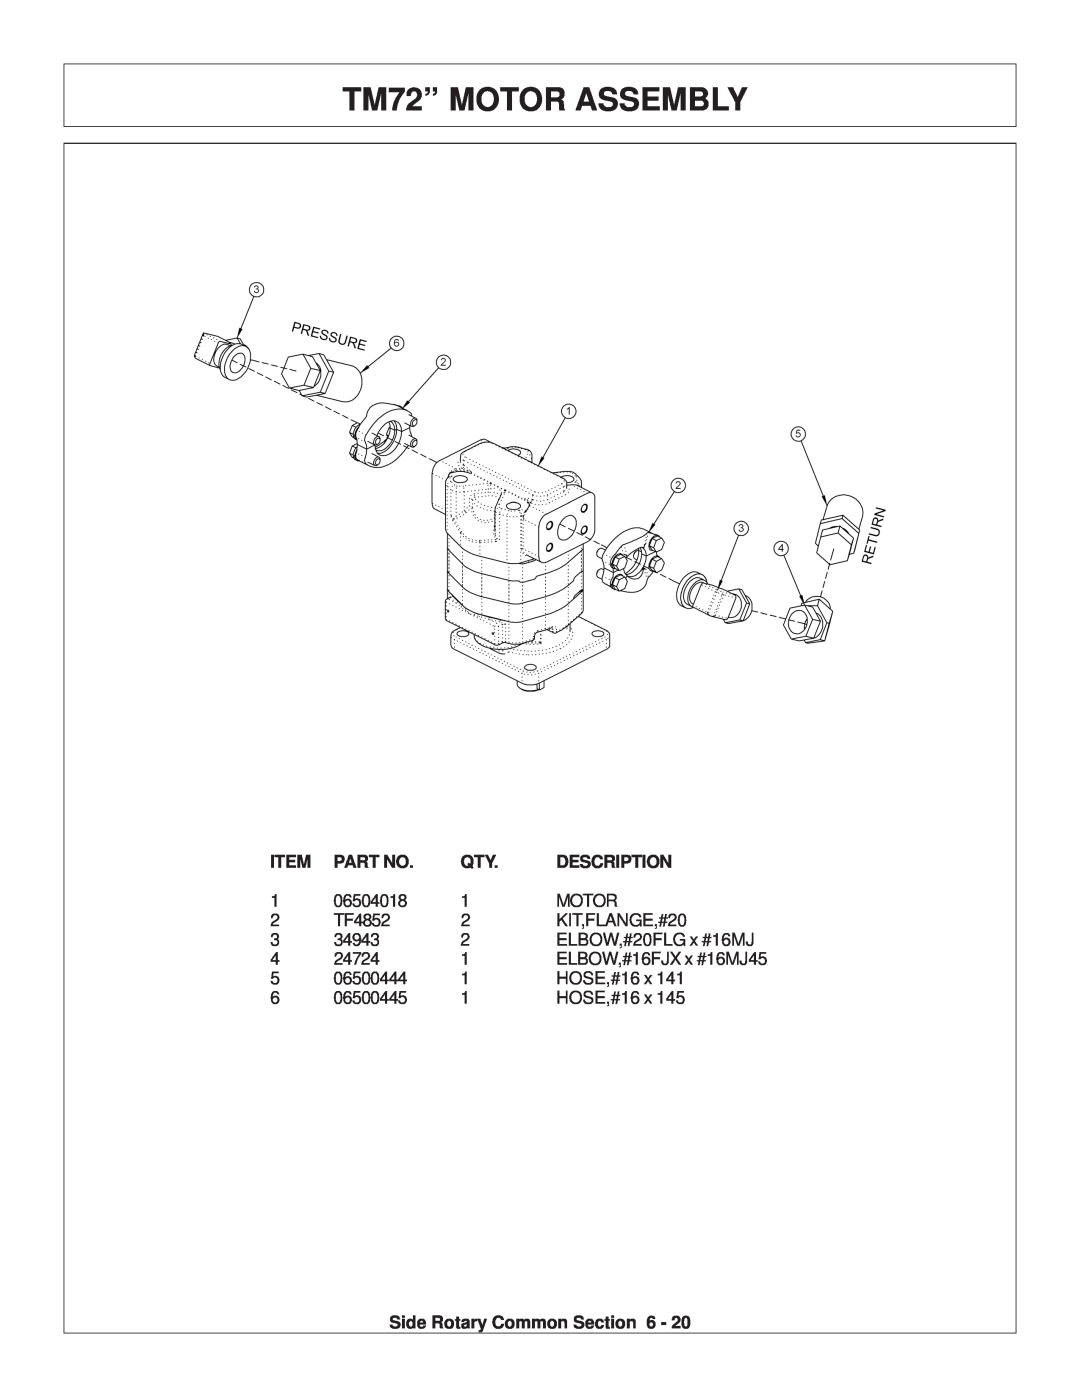 Tiger Products Co., Ltd TS 100A manual TM72” MOTOR ASSEMBLY, ELBOW,#16FJX x #16MJ45 